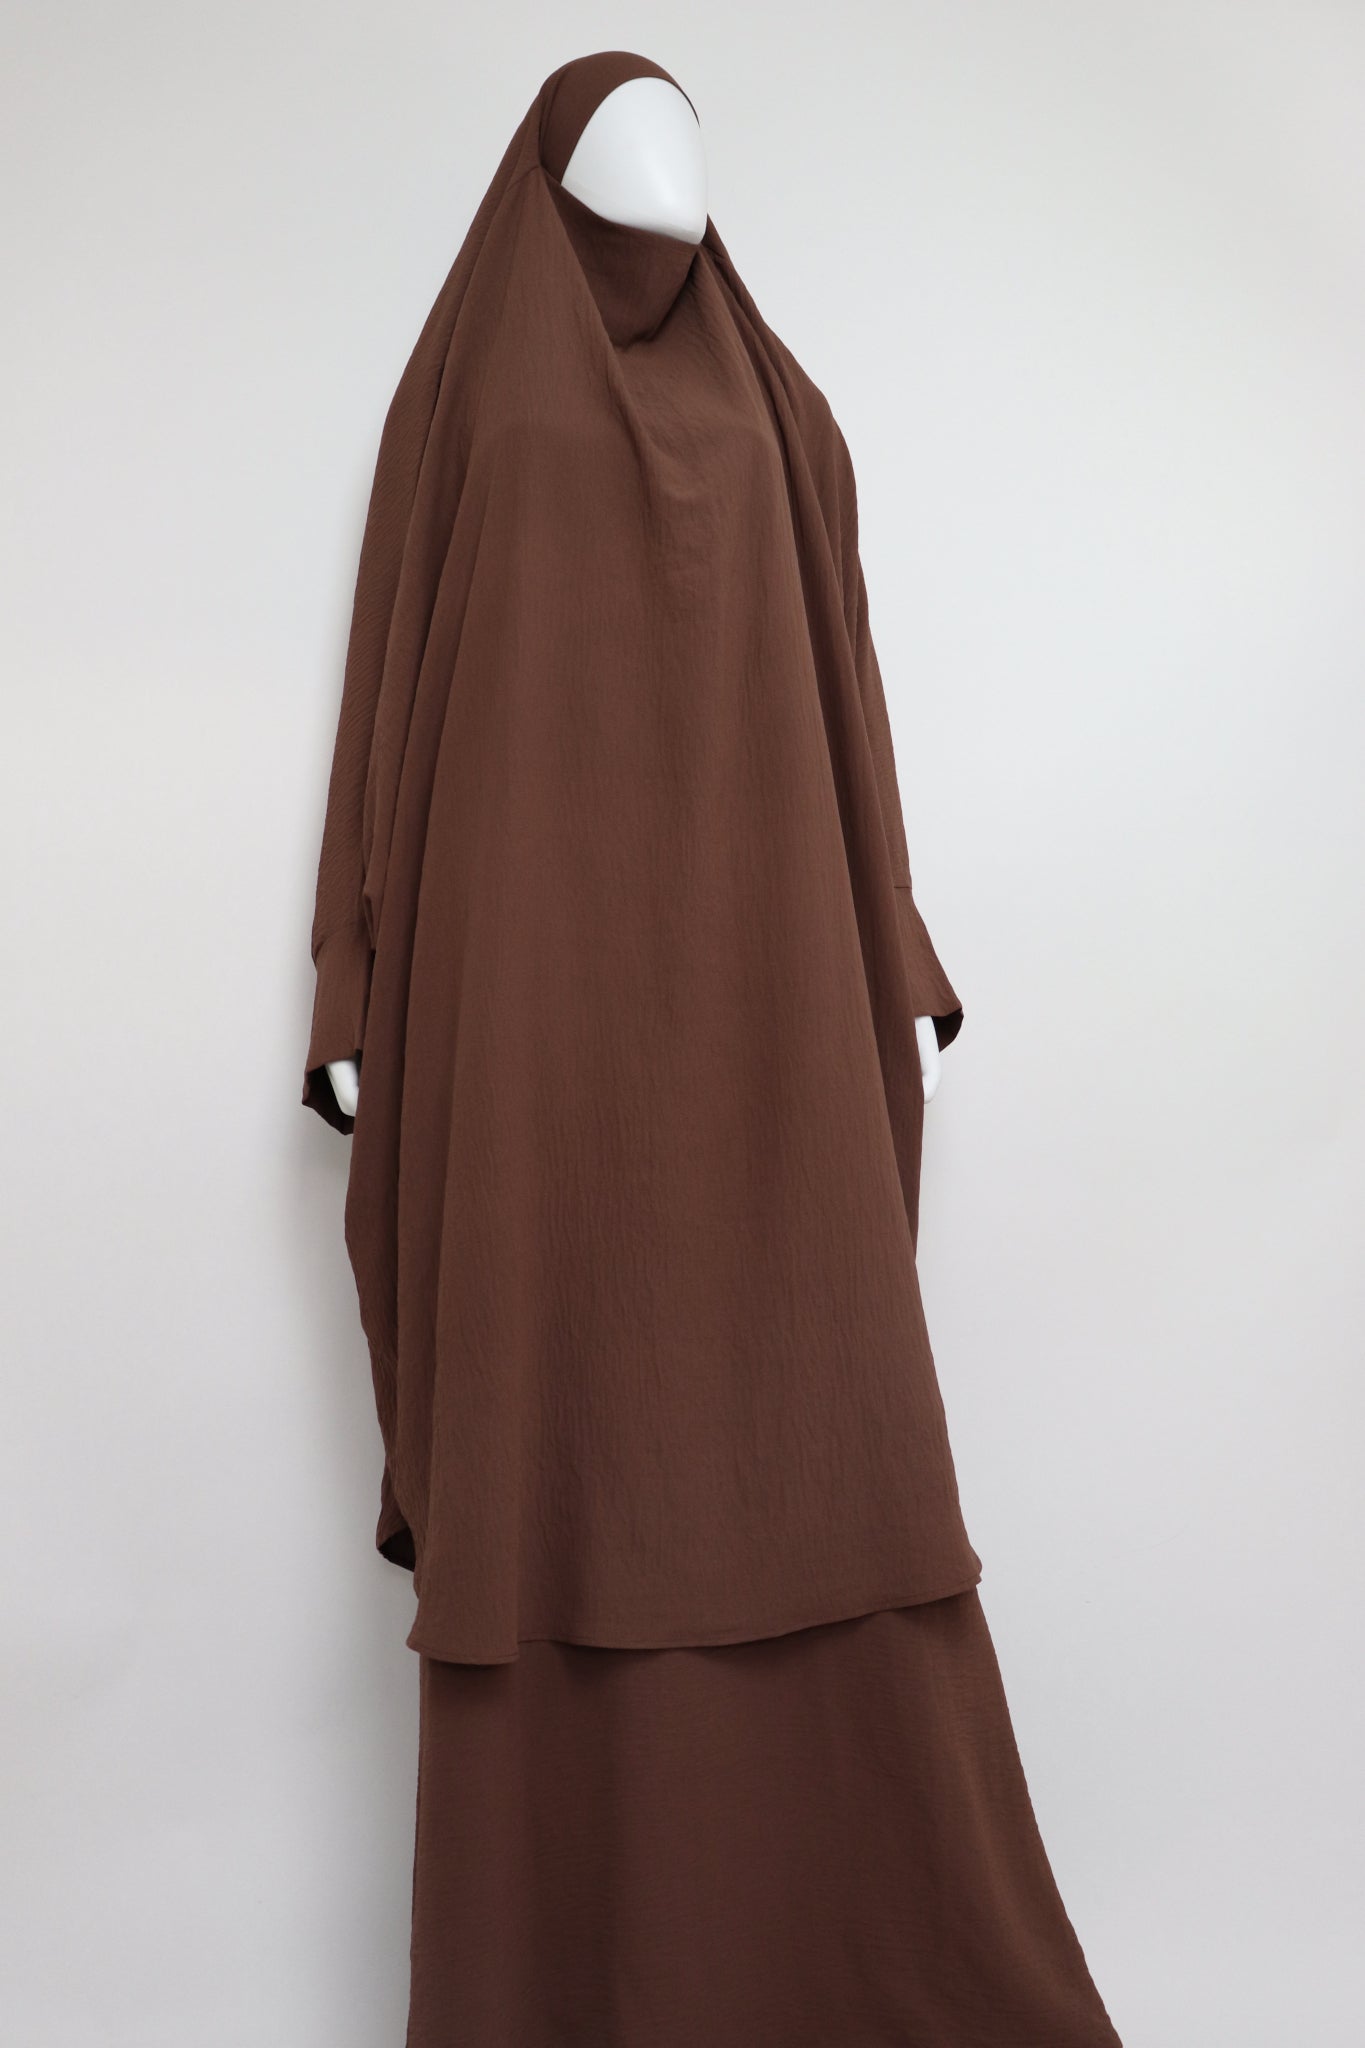 2 Piece Jilbab Dress Set - Rust Brown